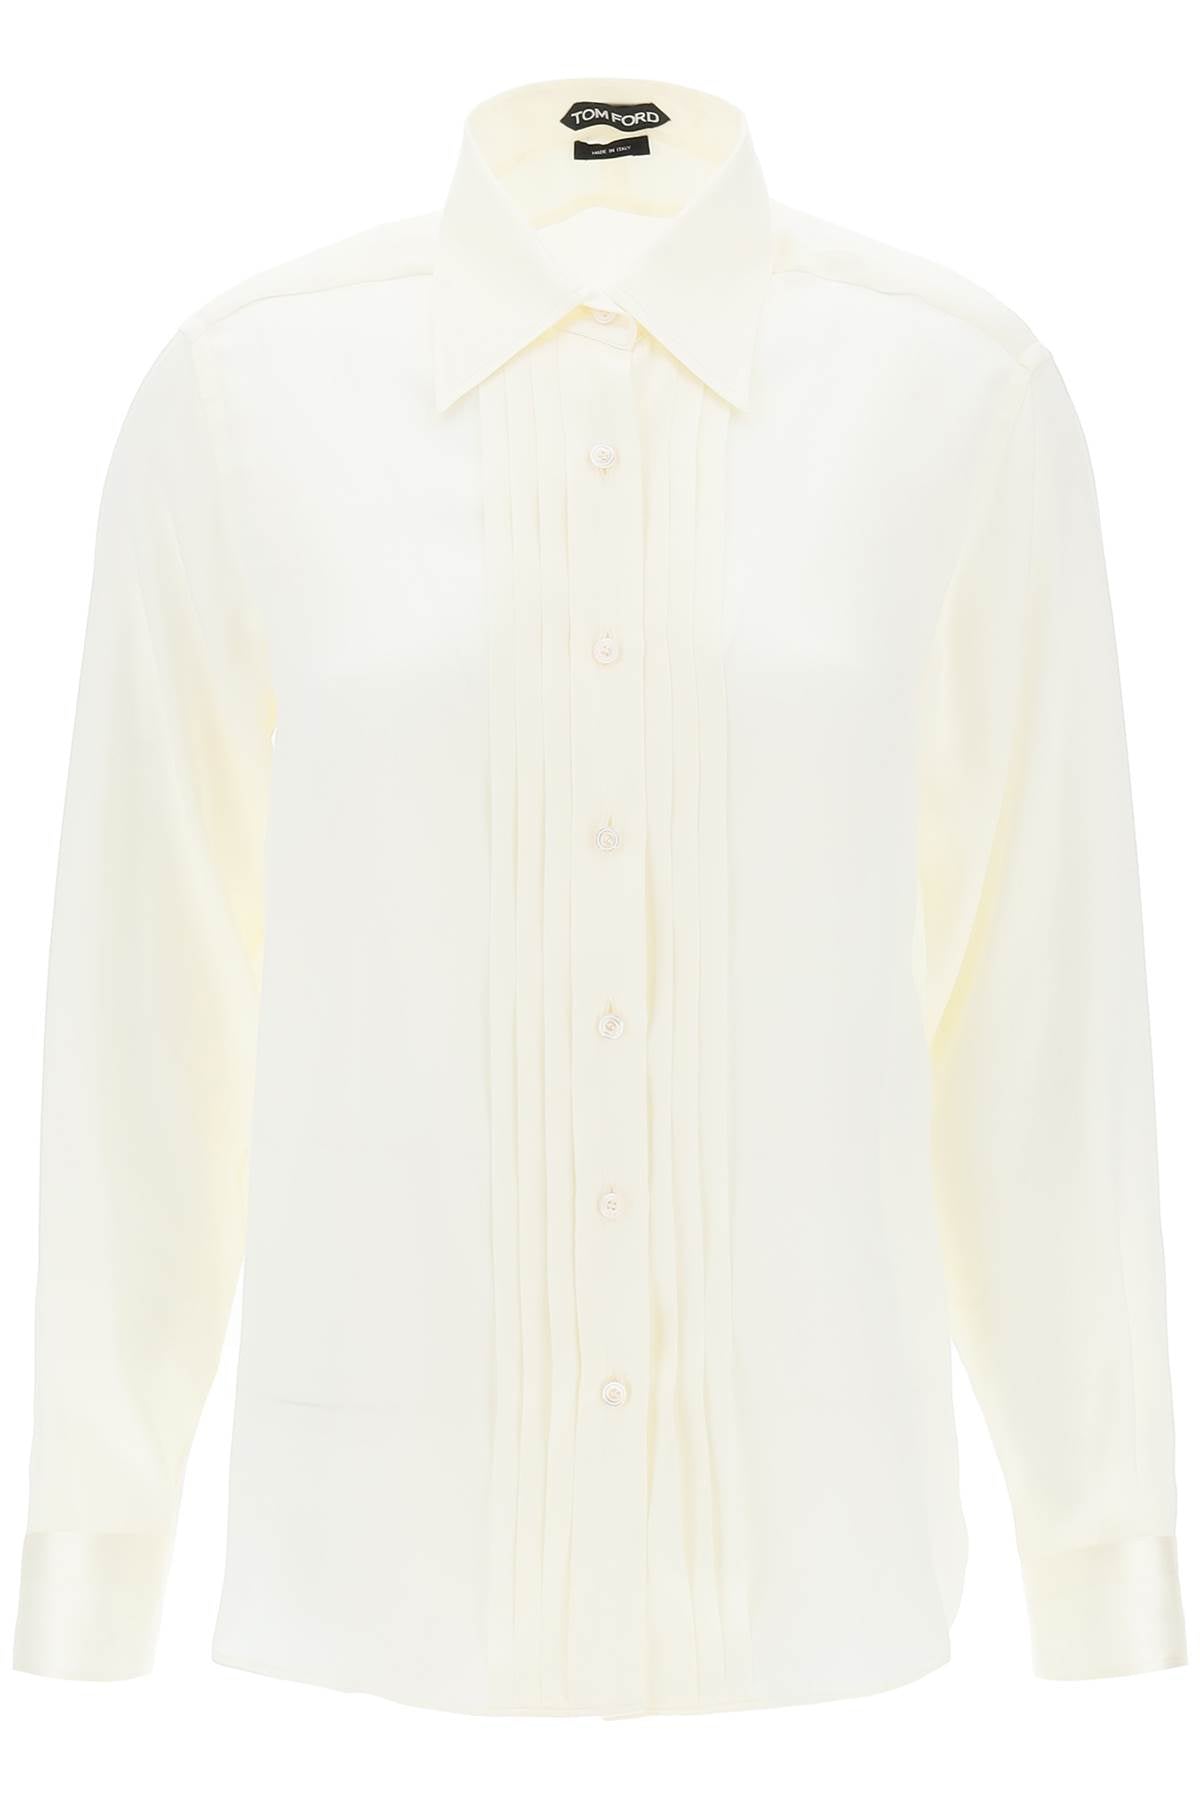 Tom ford silk charmeuse blouse shirt-0